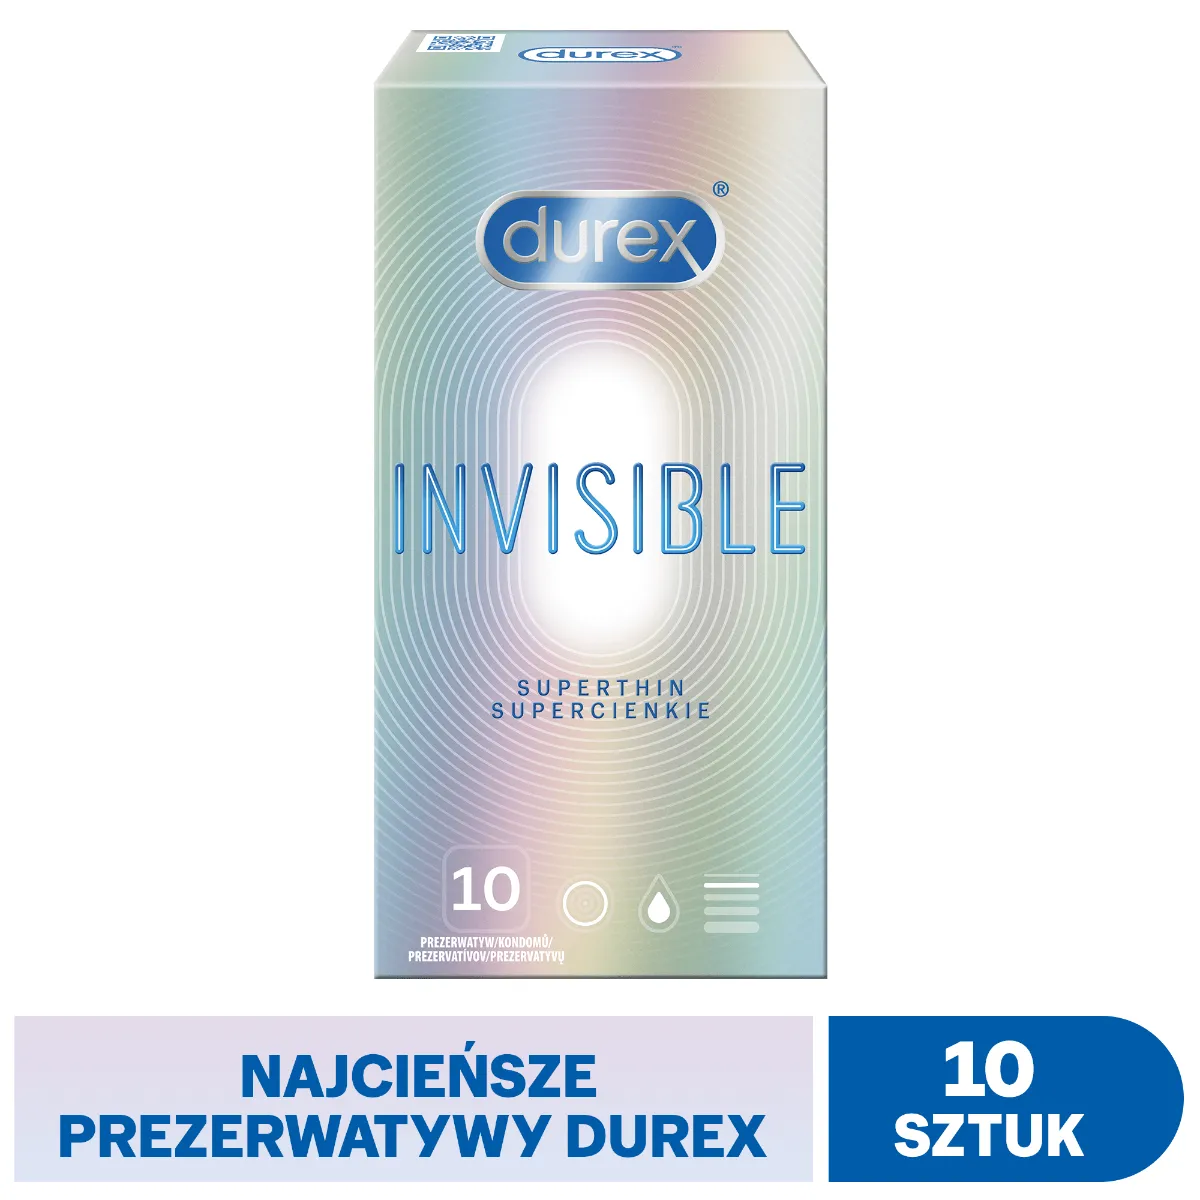 Durex Invisible, prezerwatywy, 10 sztuk 